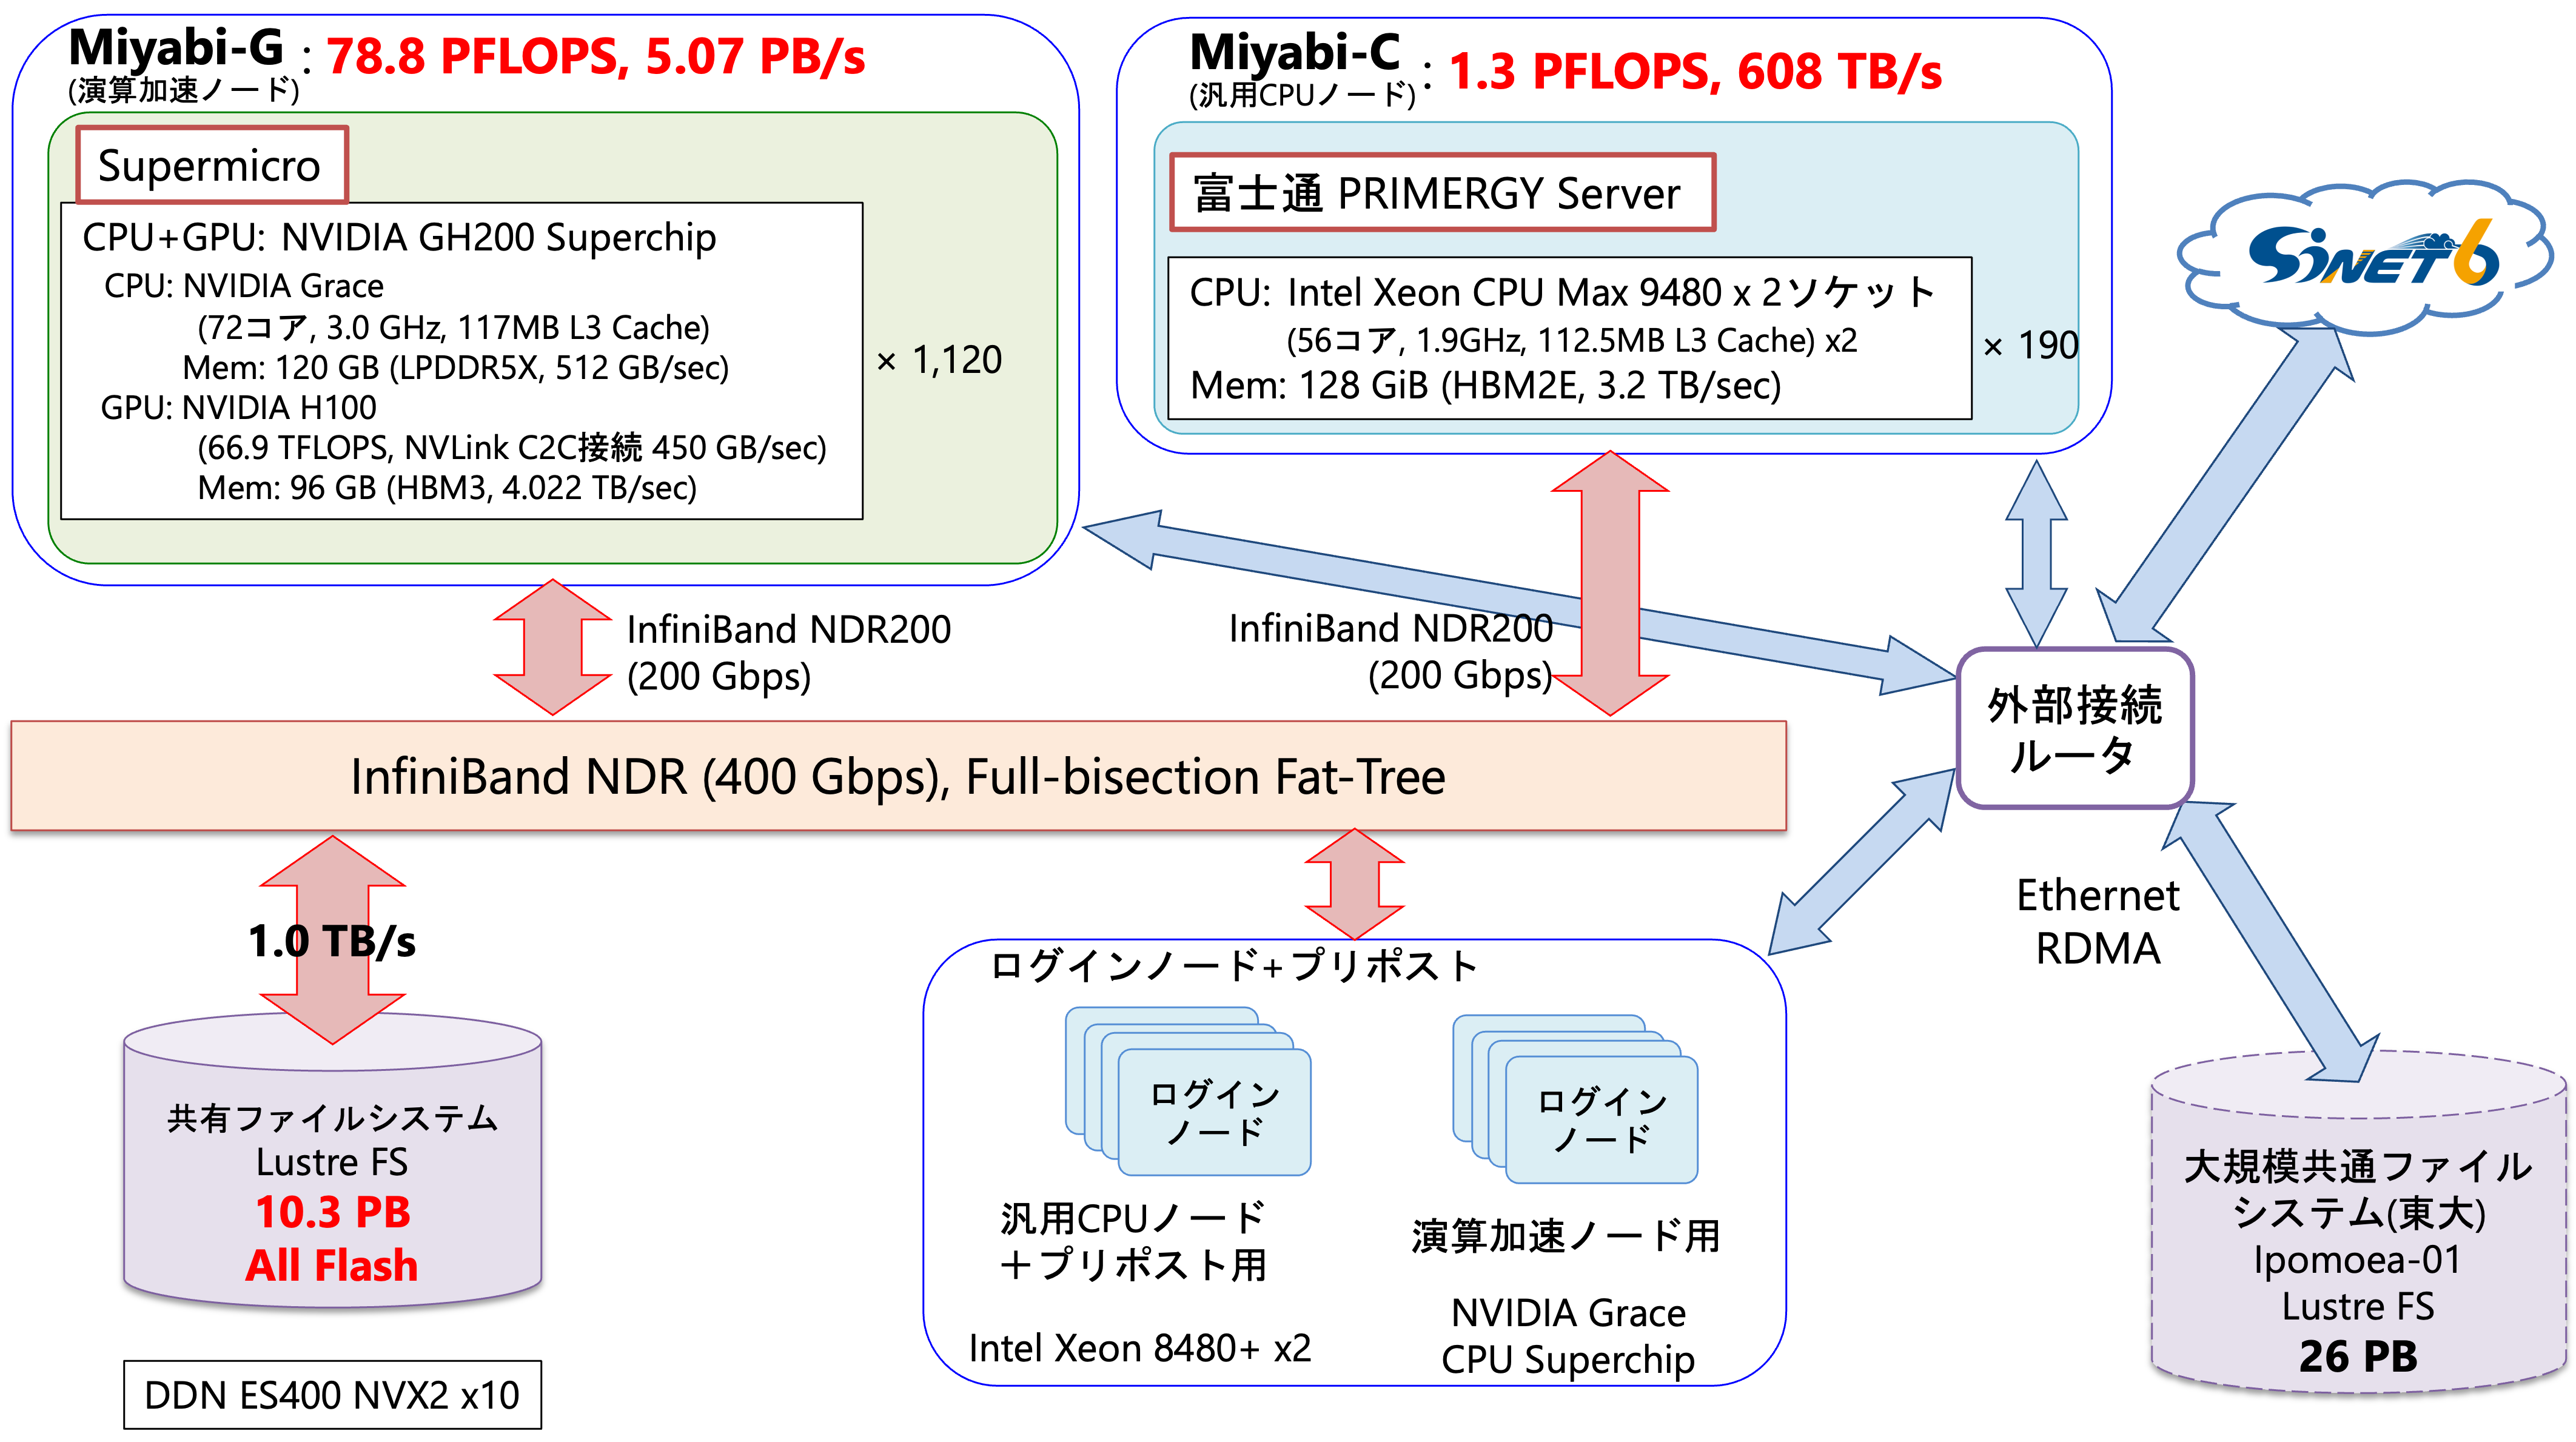 Miyabi configuration diagram